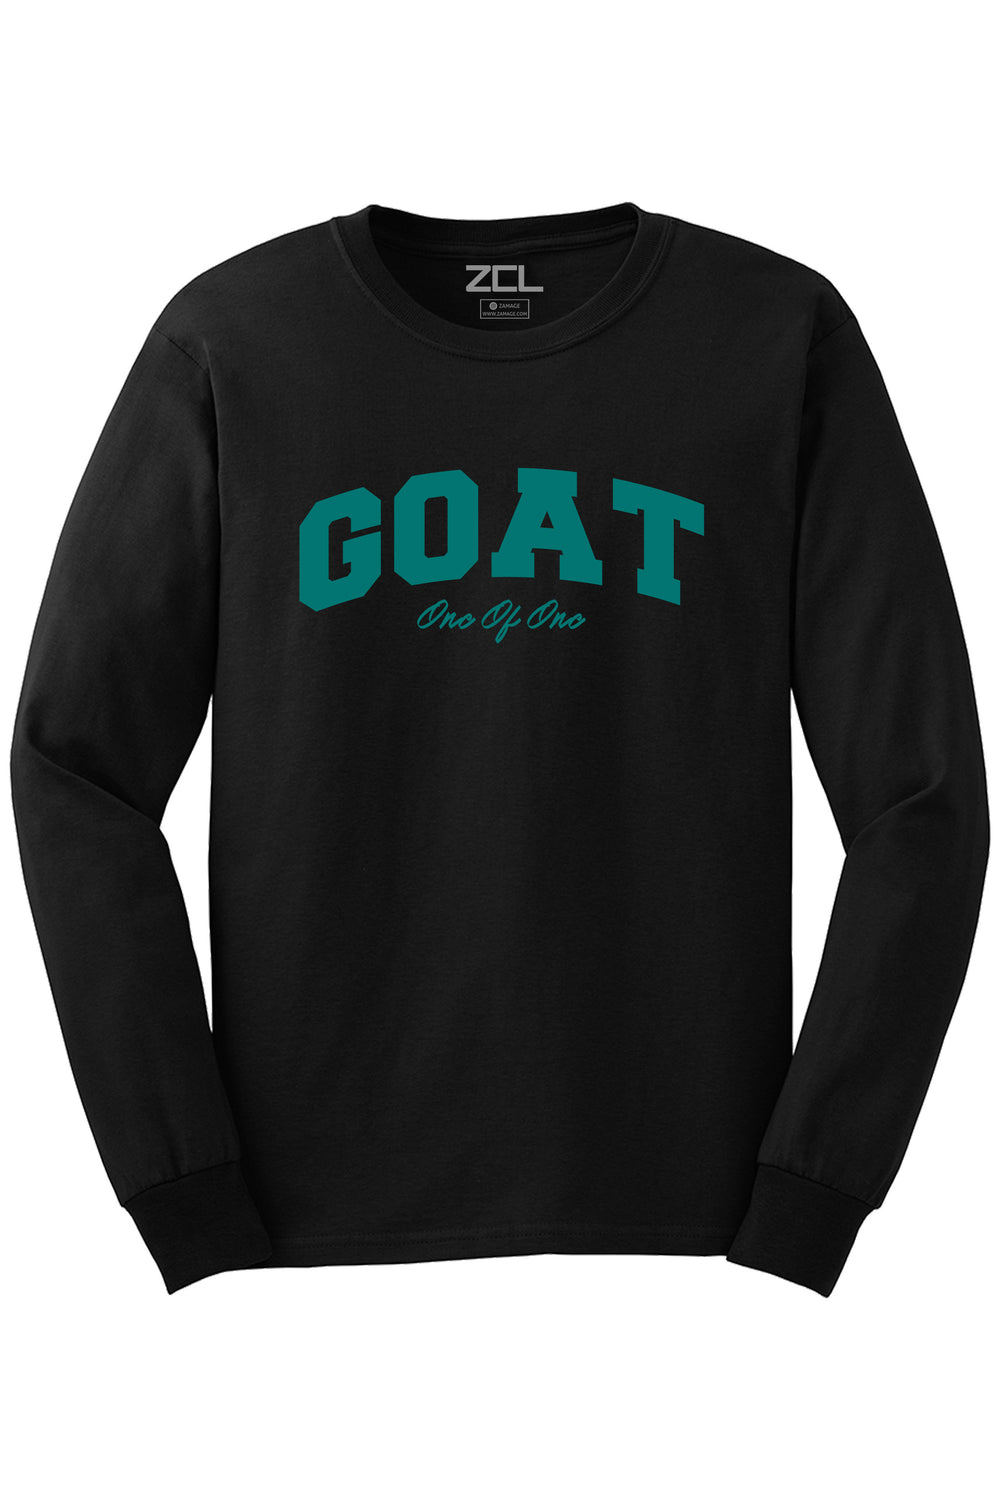 Goat Long Sleeve Tee (Teal Logo) - Zamage